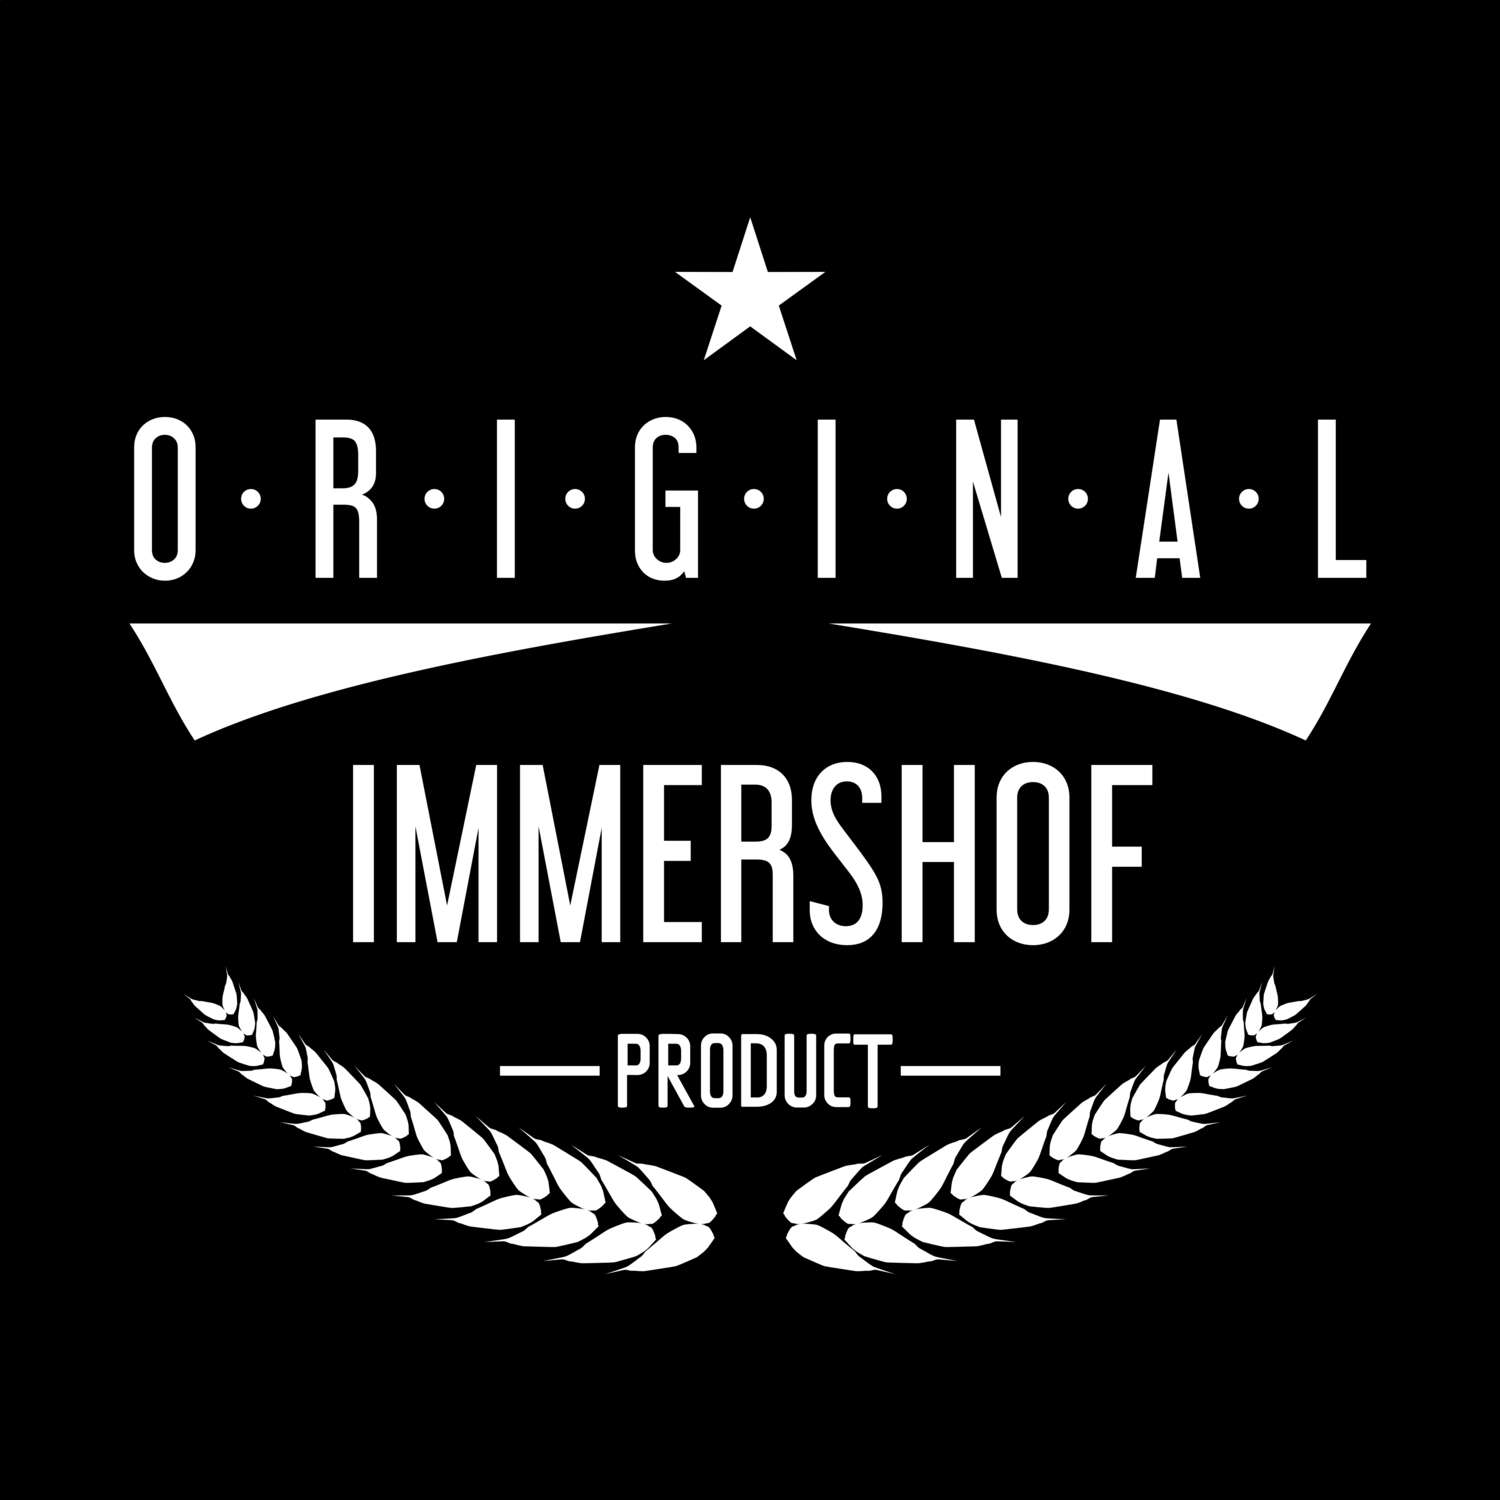 Immershof T-Shirt »Original Product«